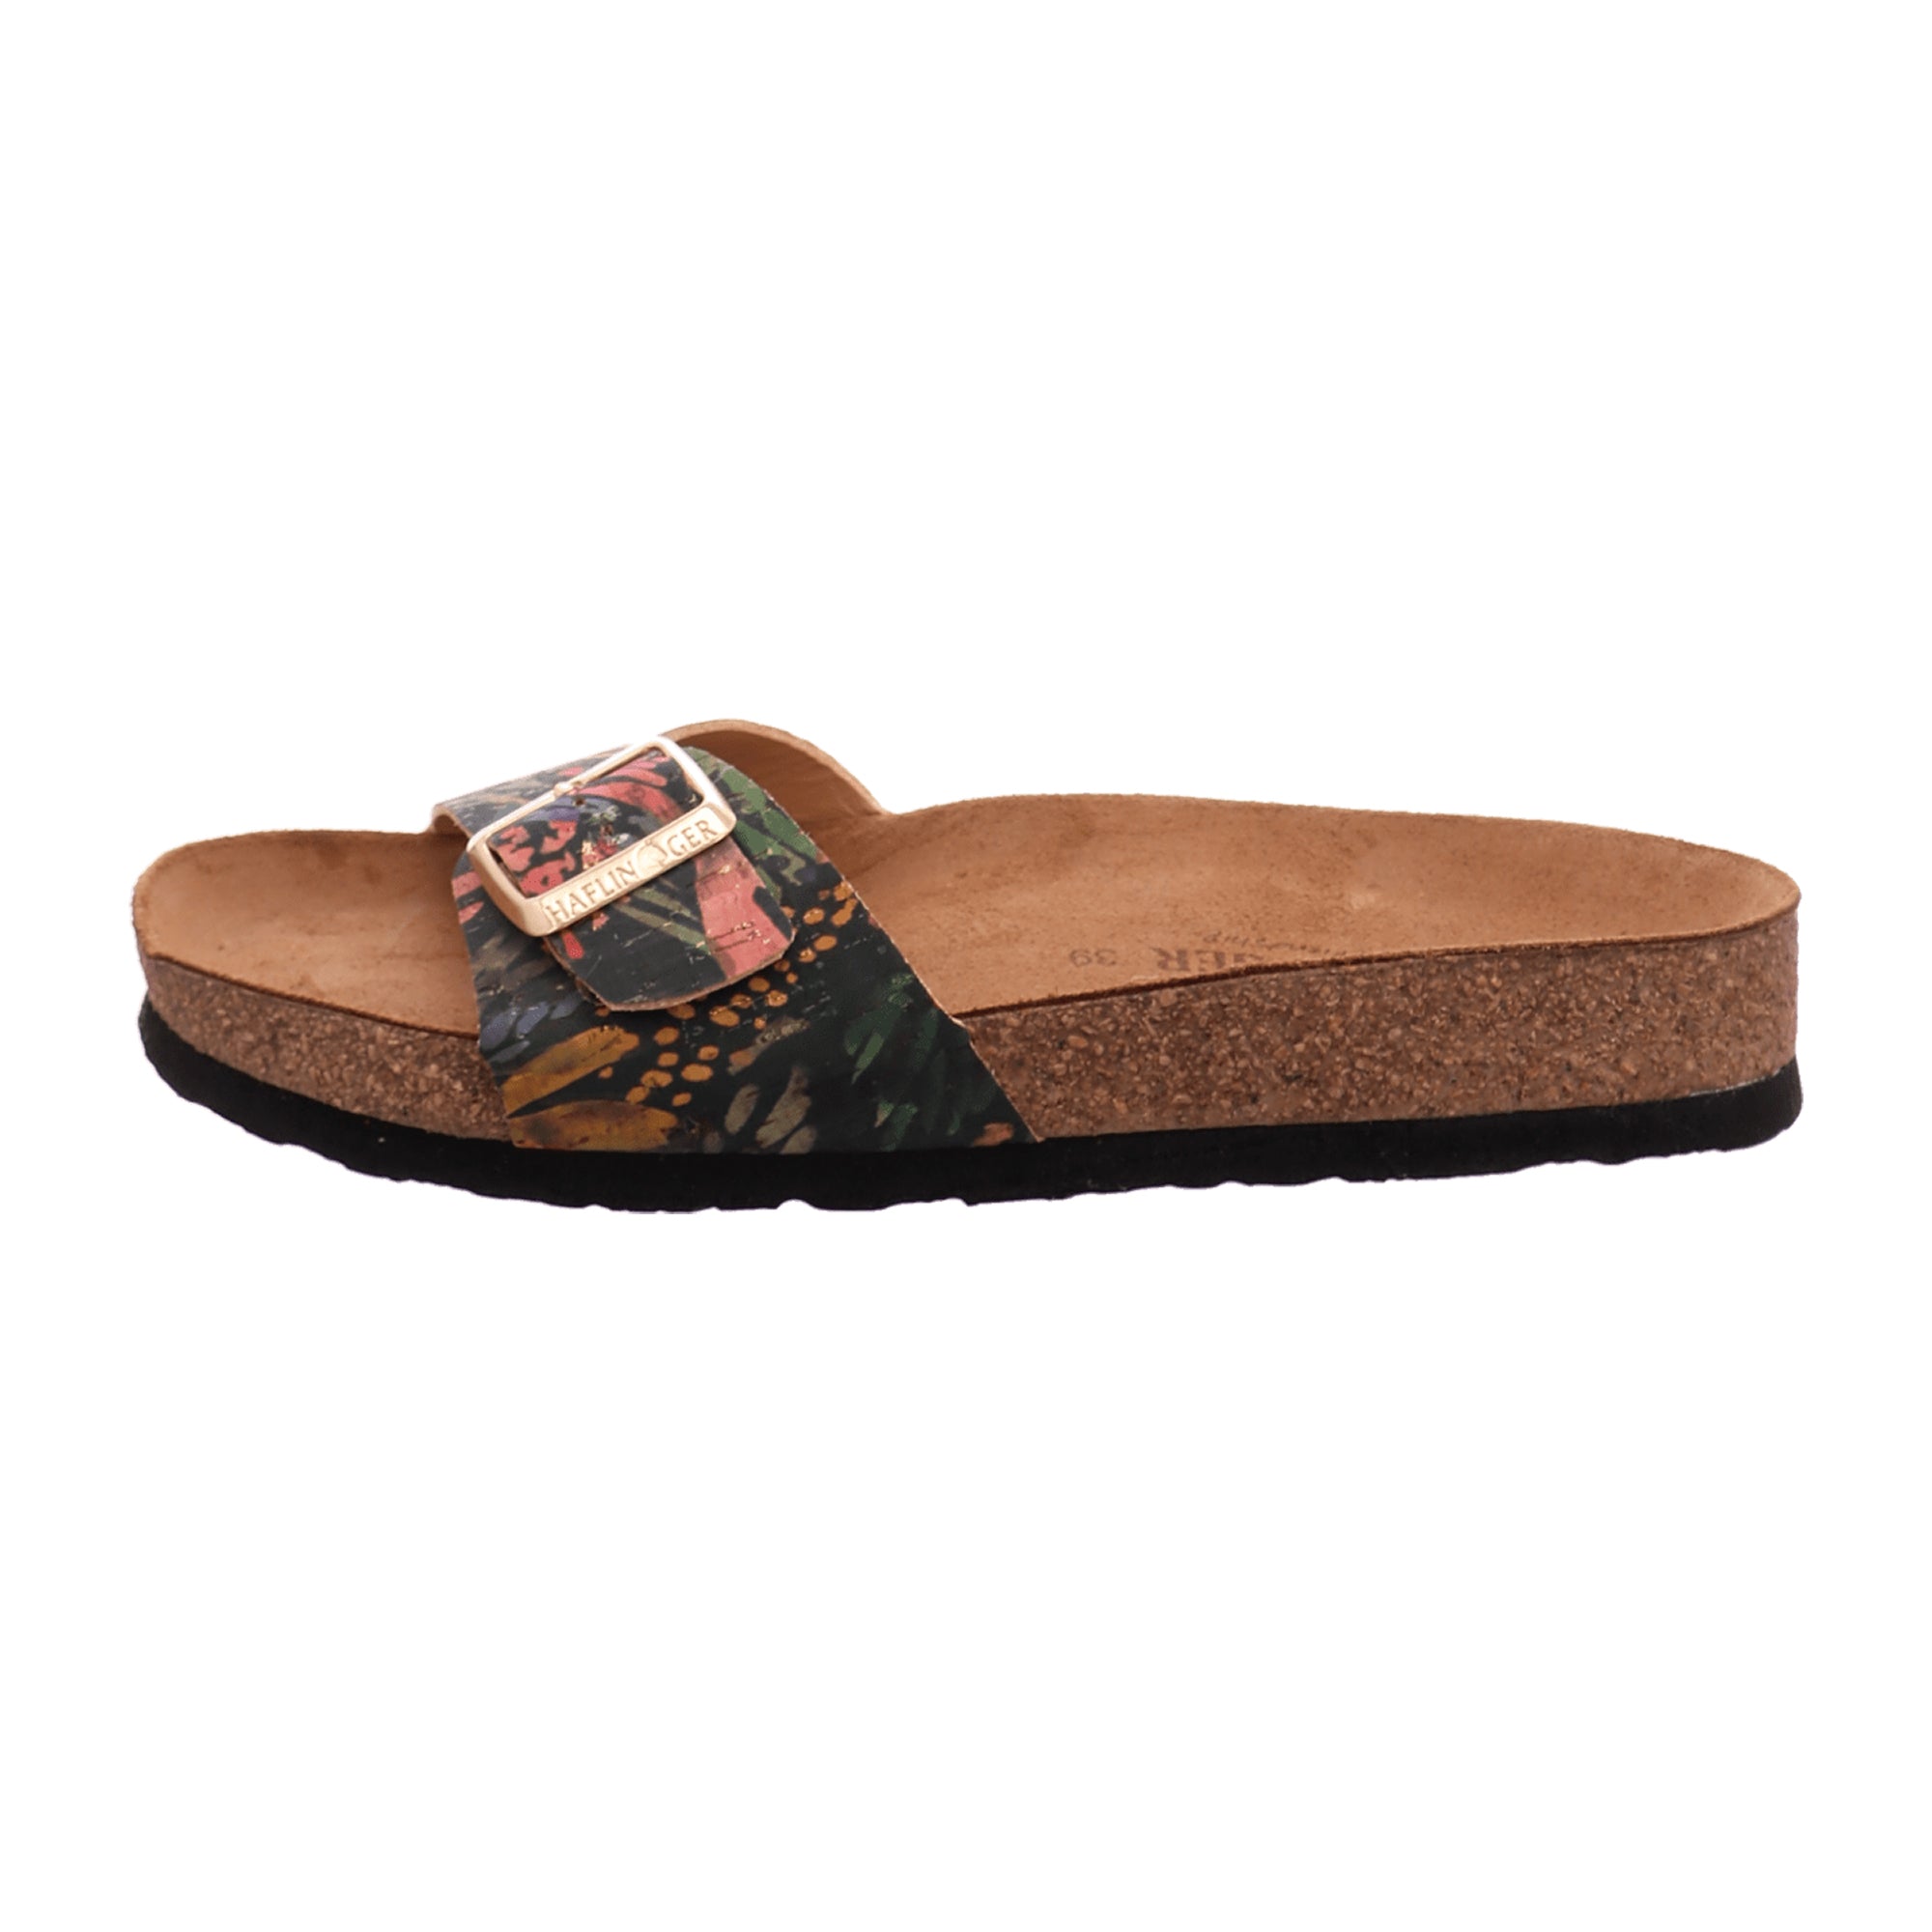 Haflinger Bio Gina Women's Sandals - Tropic Multicolor, Eco-friendly, Size EU 37